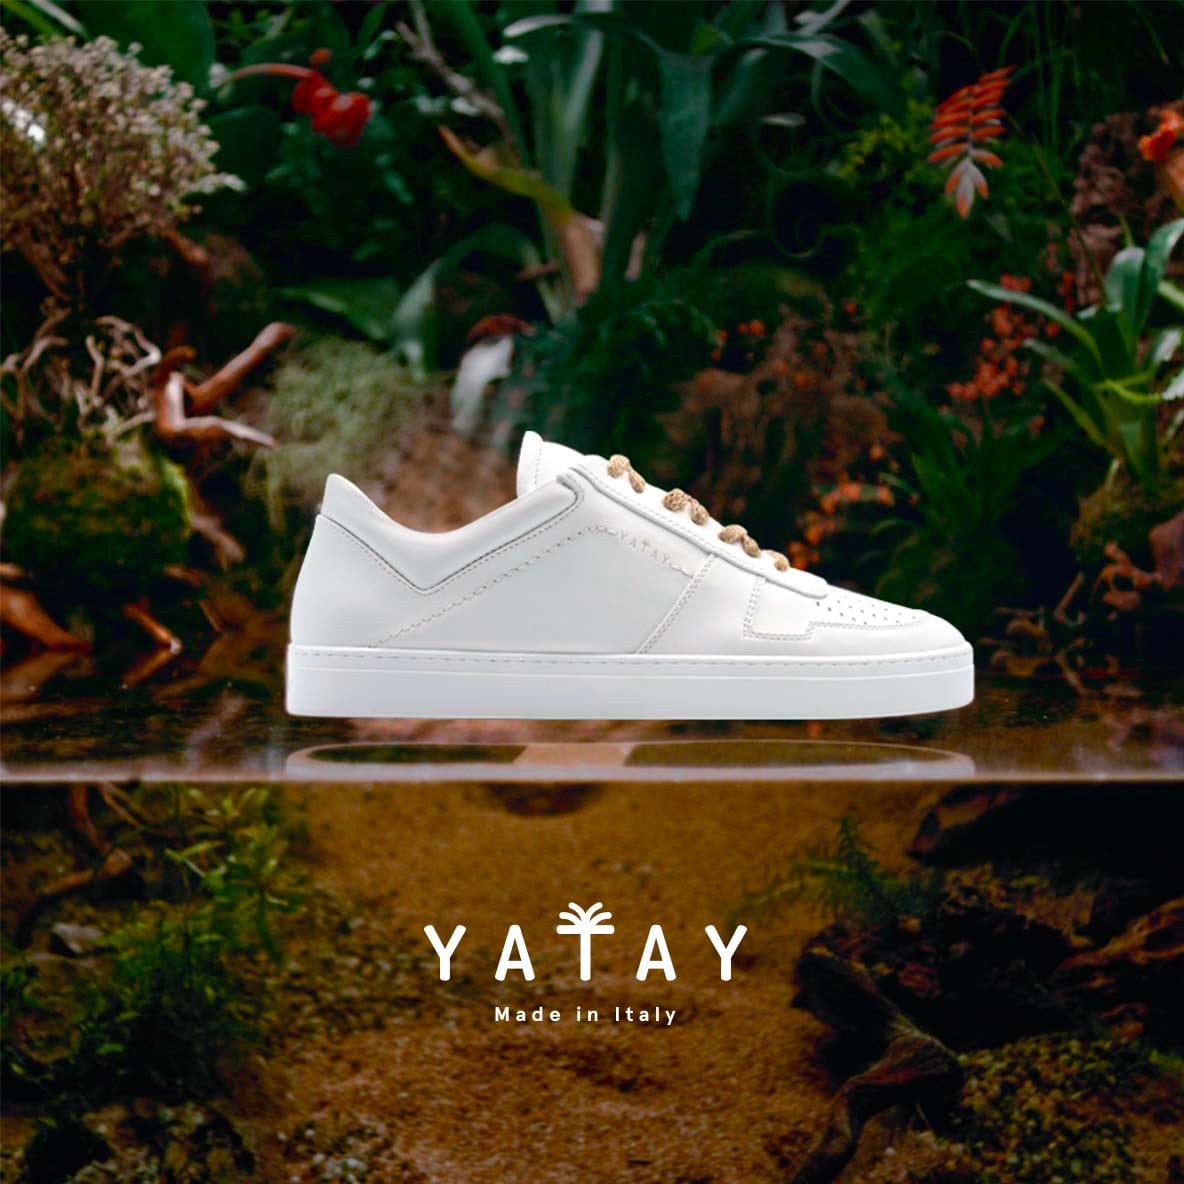 Yatay Irori Birch Shoes & Dustbag US Size 8 White (s) | eBay